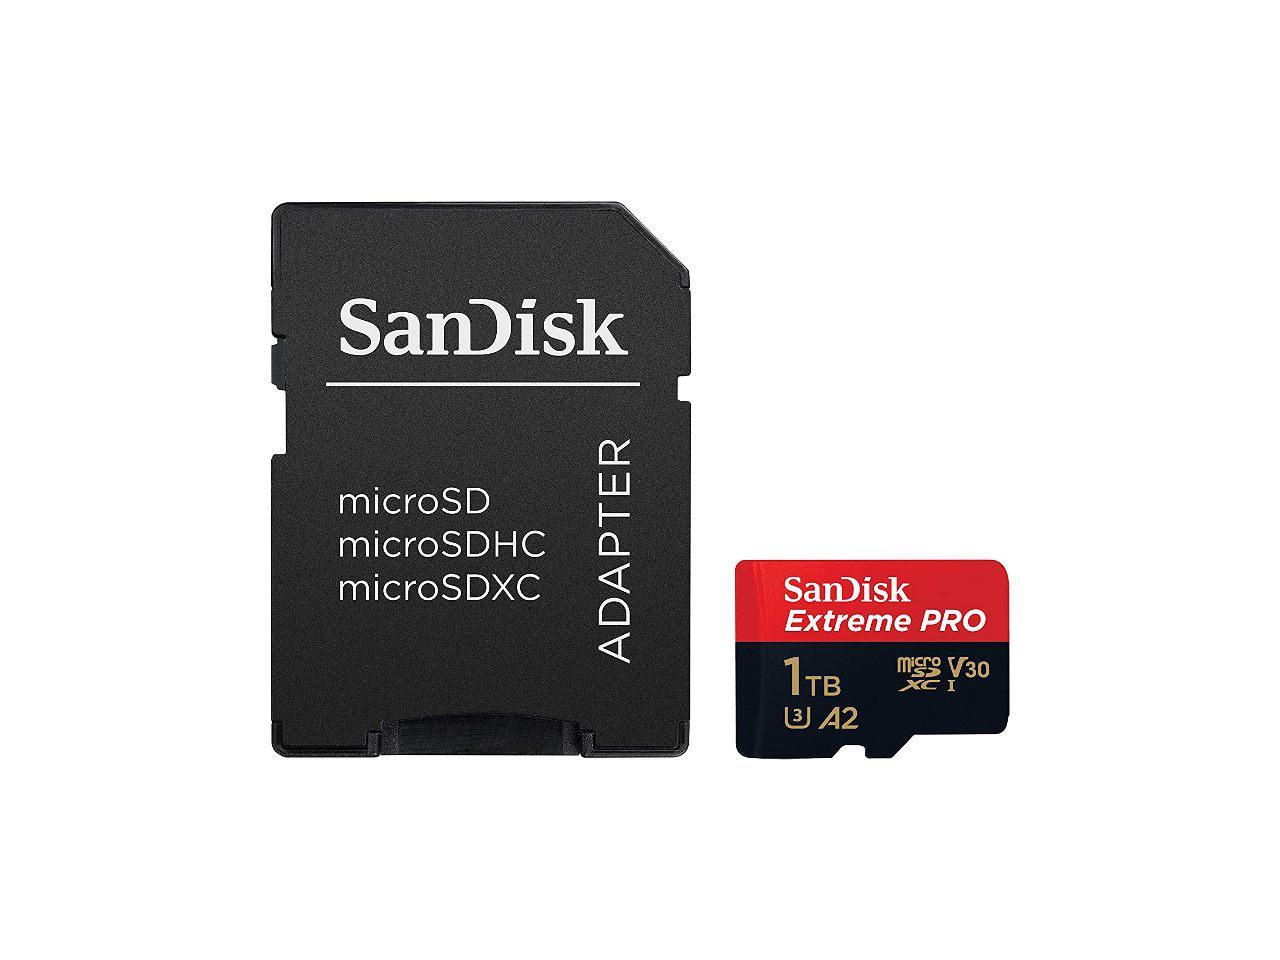 Sandisk EXTREME PRO UHS-I 1TB memory card MicroSDXC Class 10 